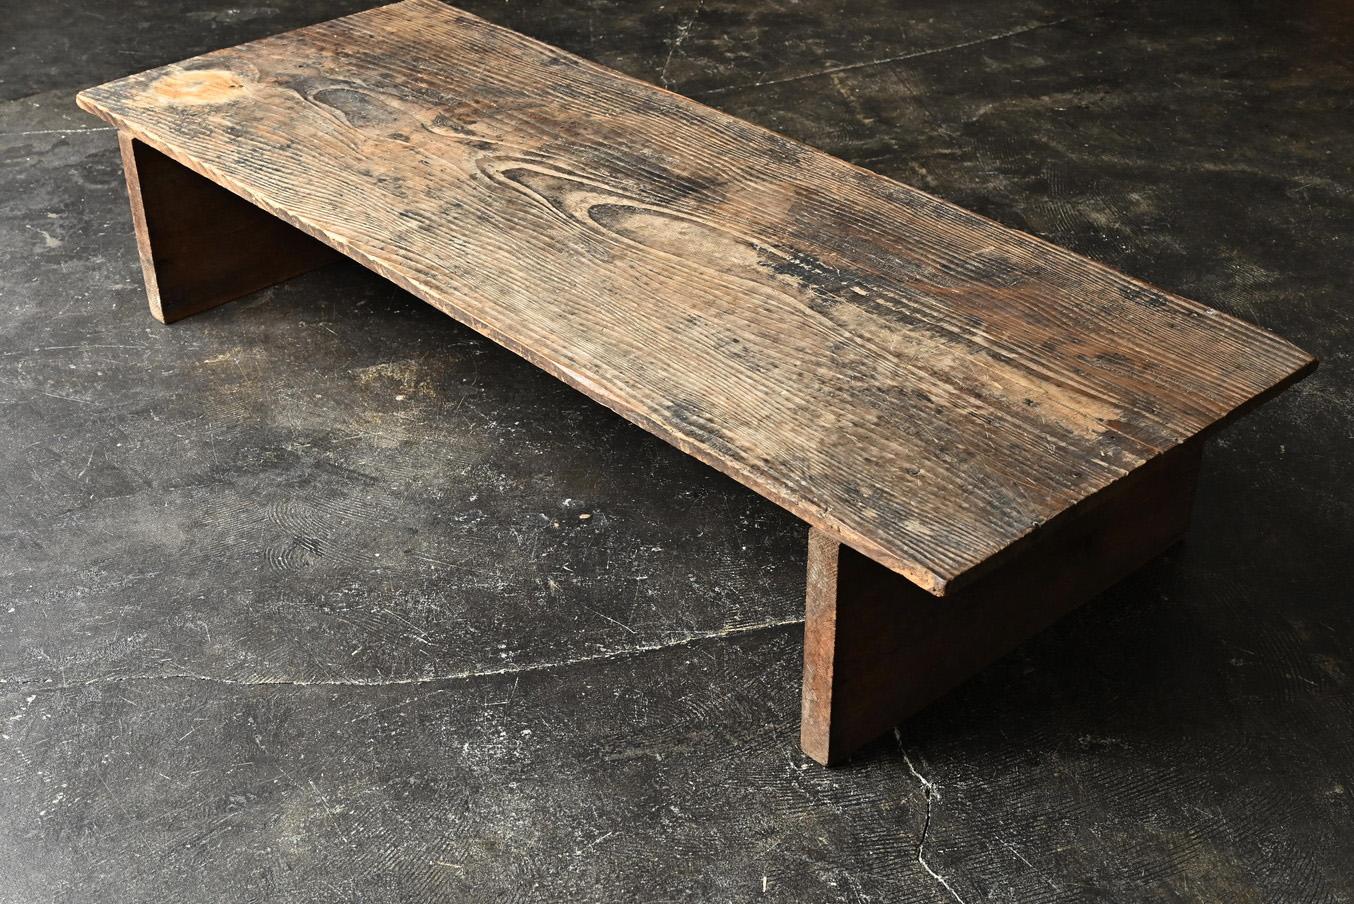 Woodwork Japanese antique wooden low table/1868-1920/Wabisabi wood grain